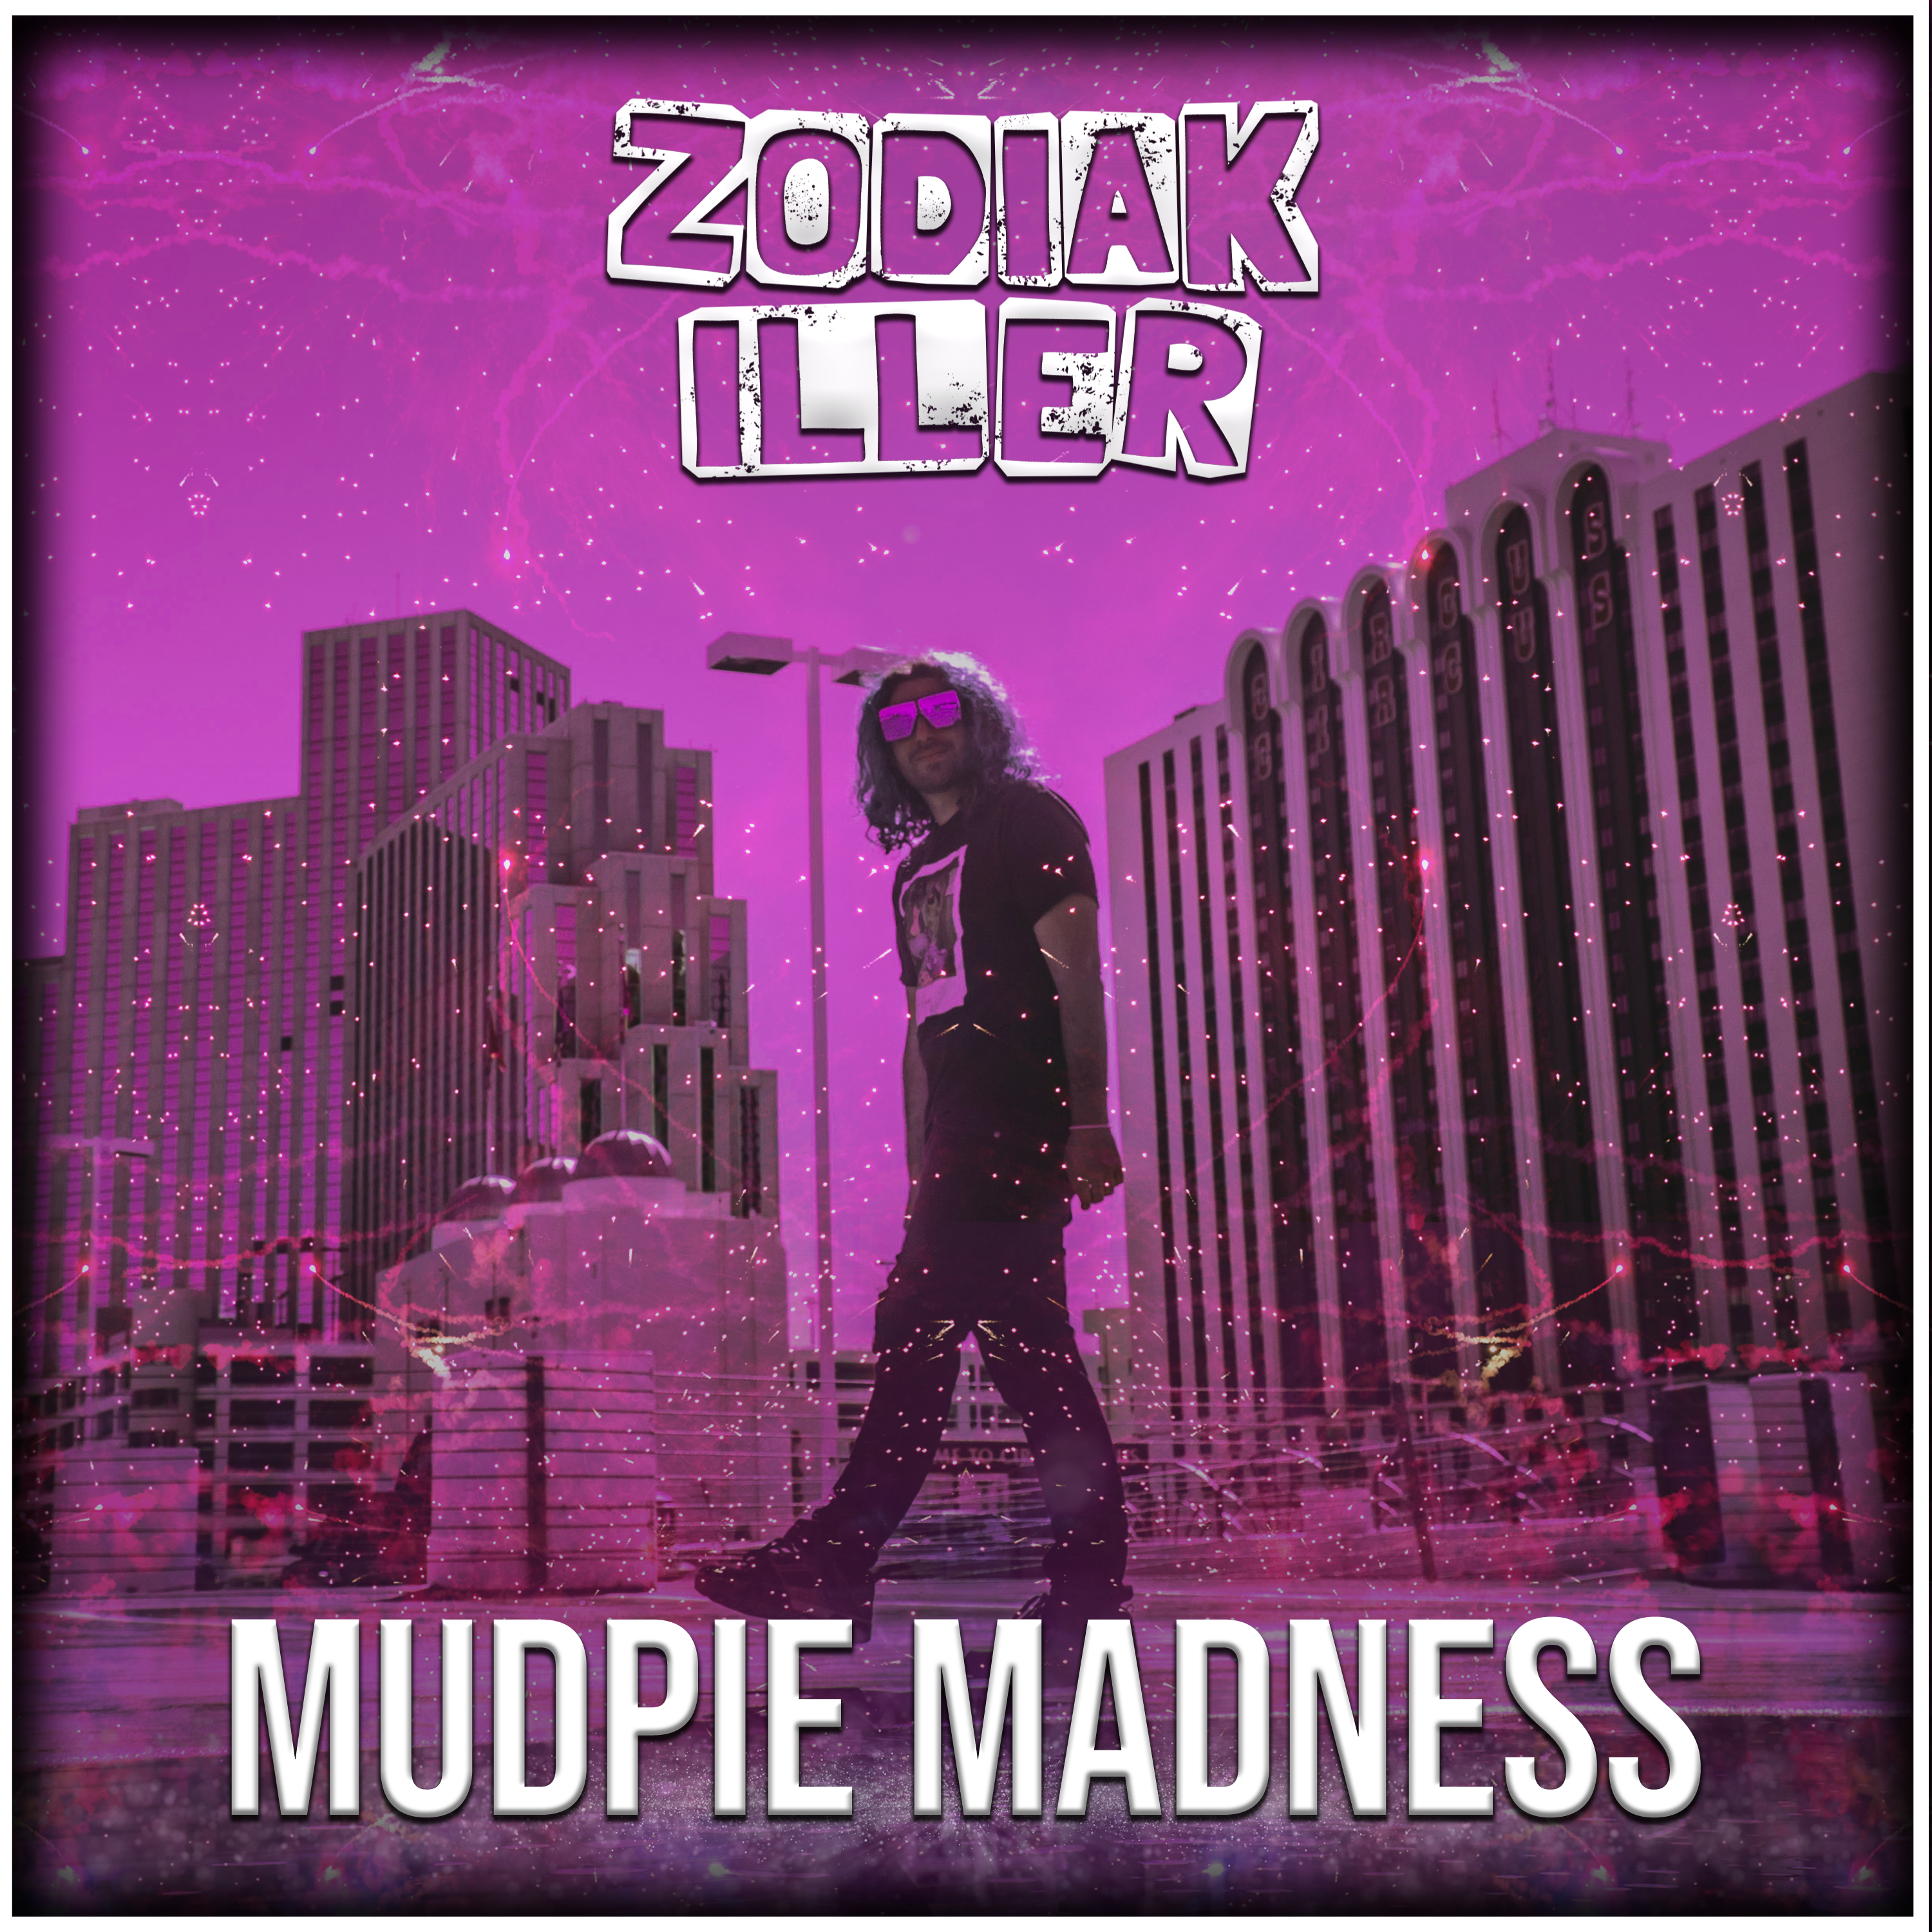 Mudpie Madness 